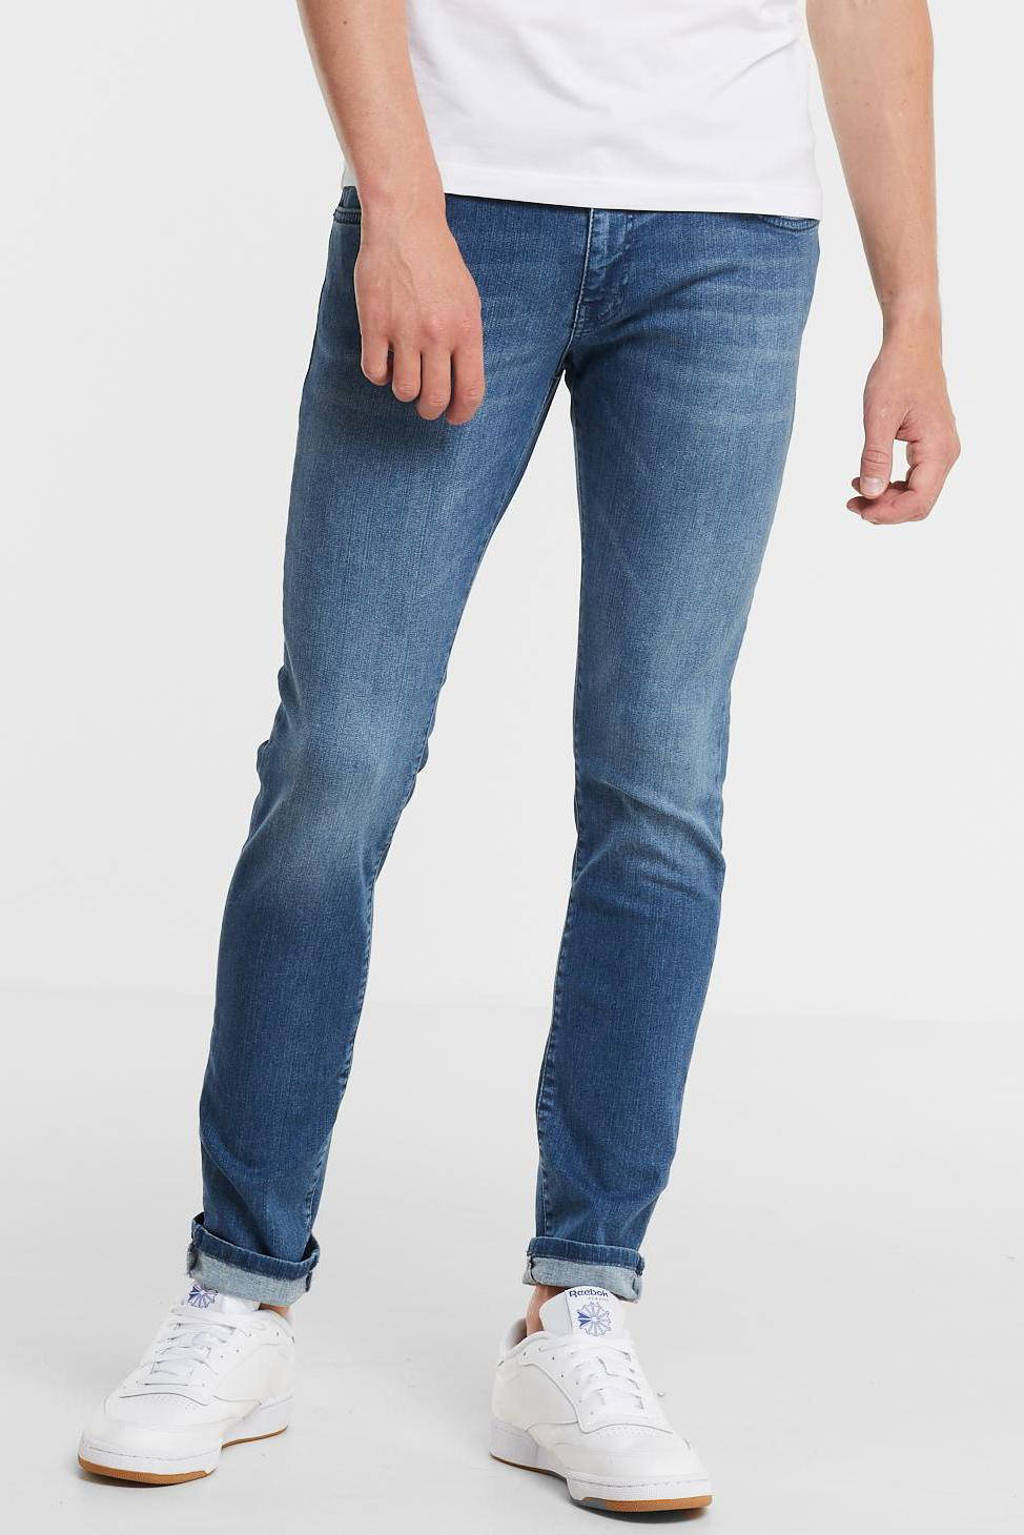 Cars slim fit jeans BOAS stone used